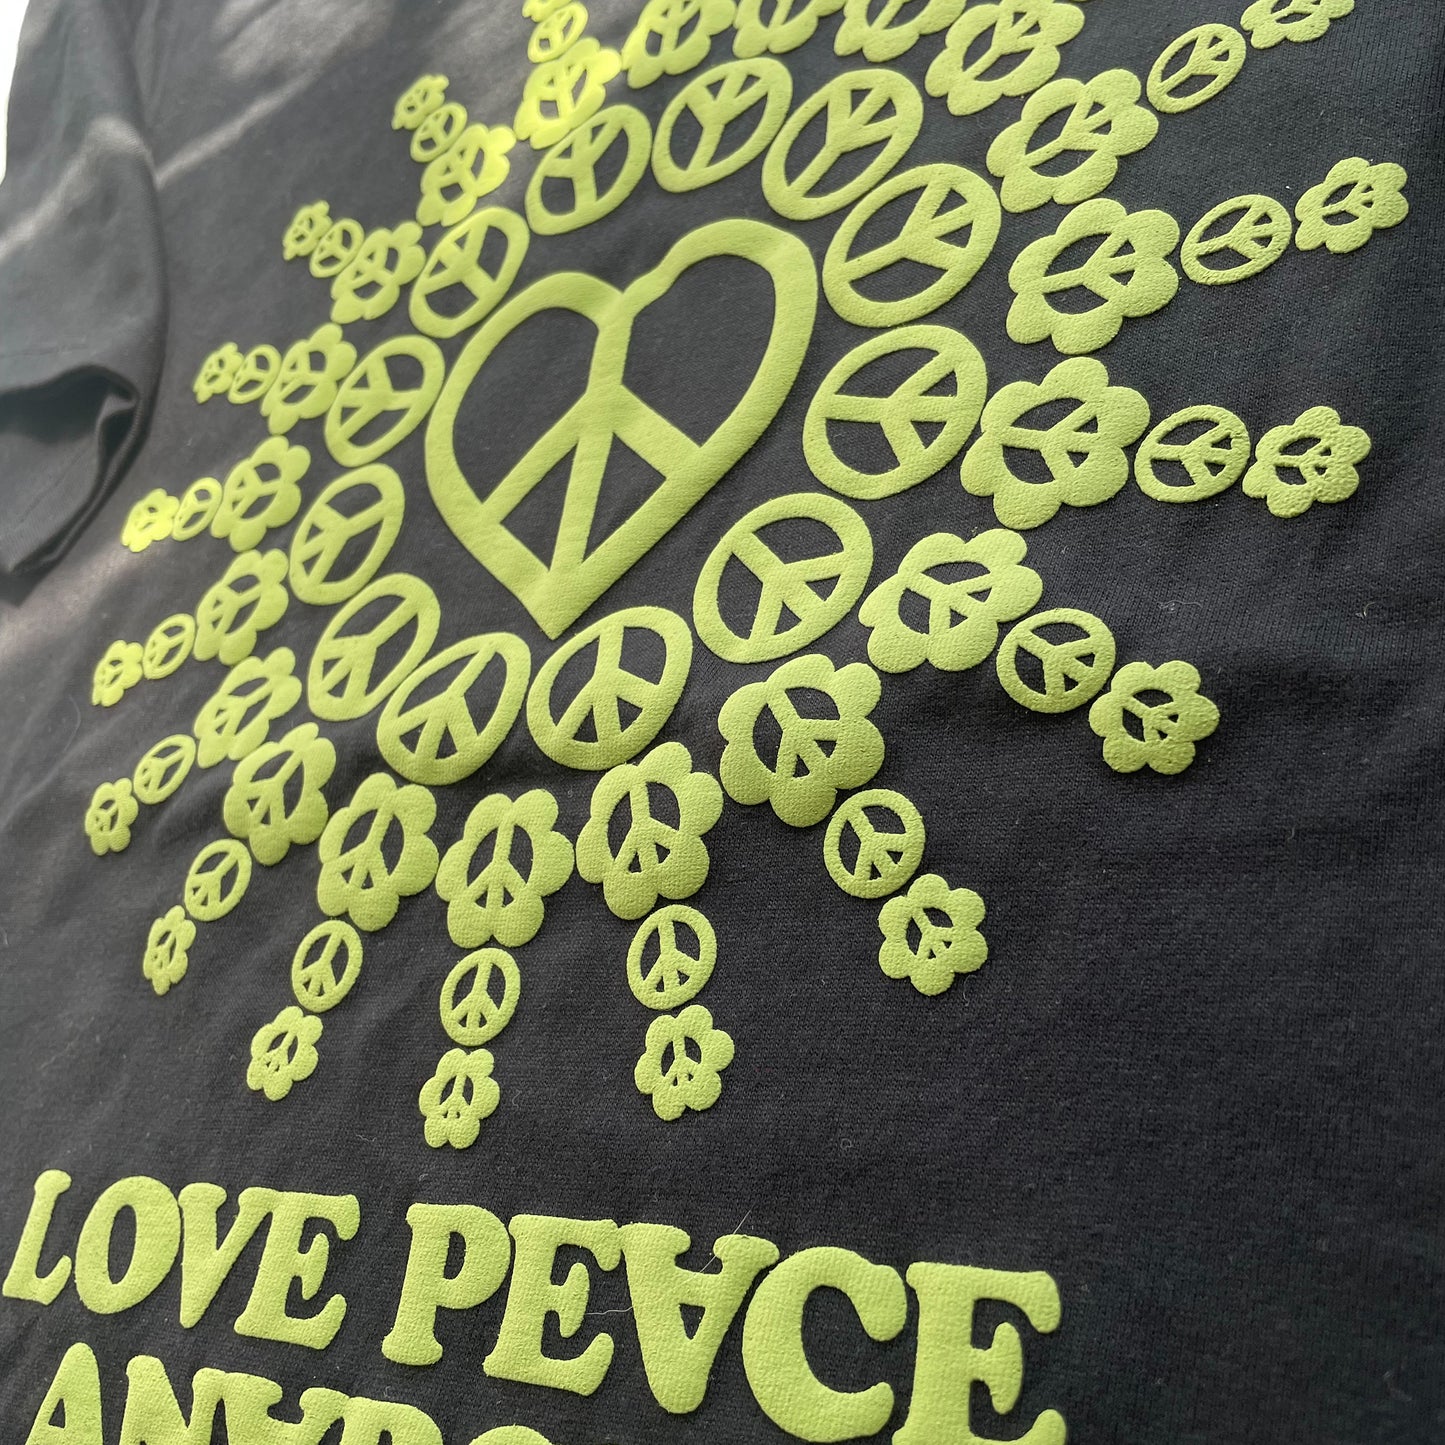 LOVE PEACE ANARCHY - Black Tee